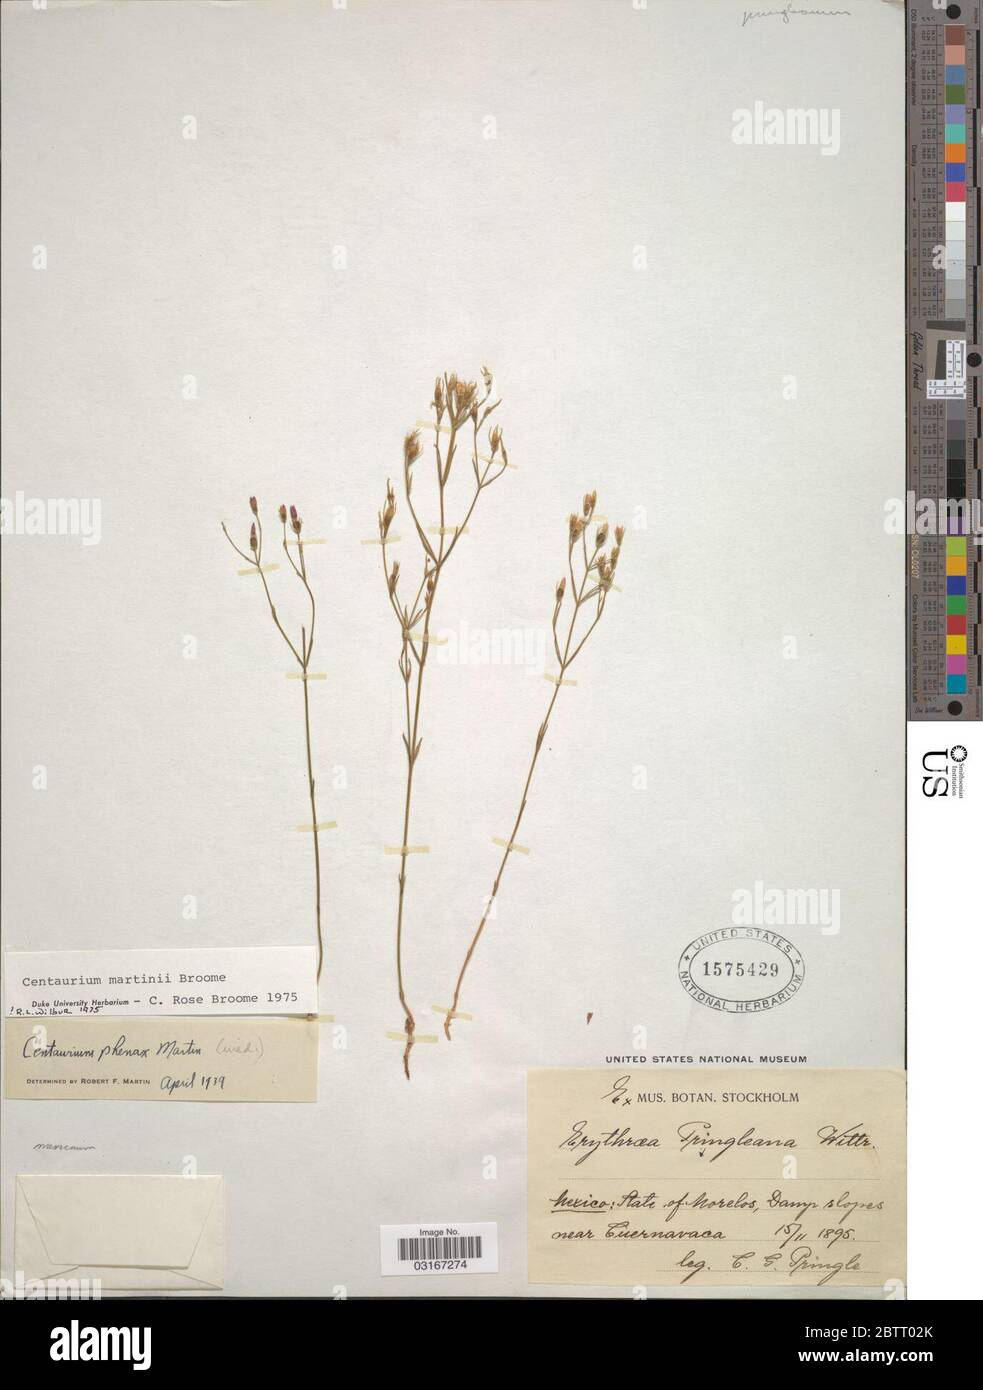 Centaurium martinii CR Broome. Stock Photo